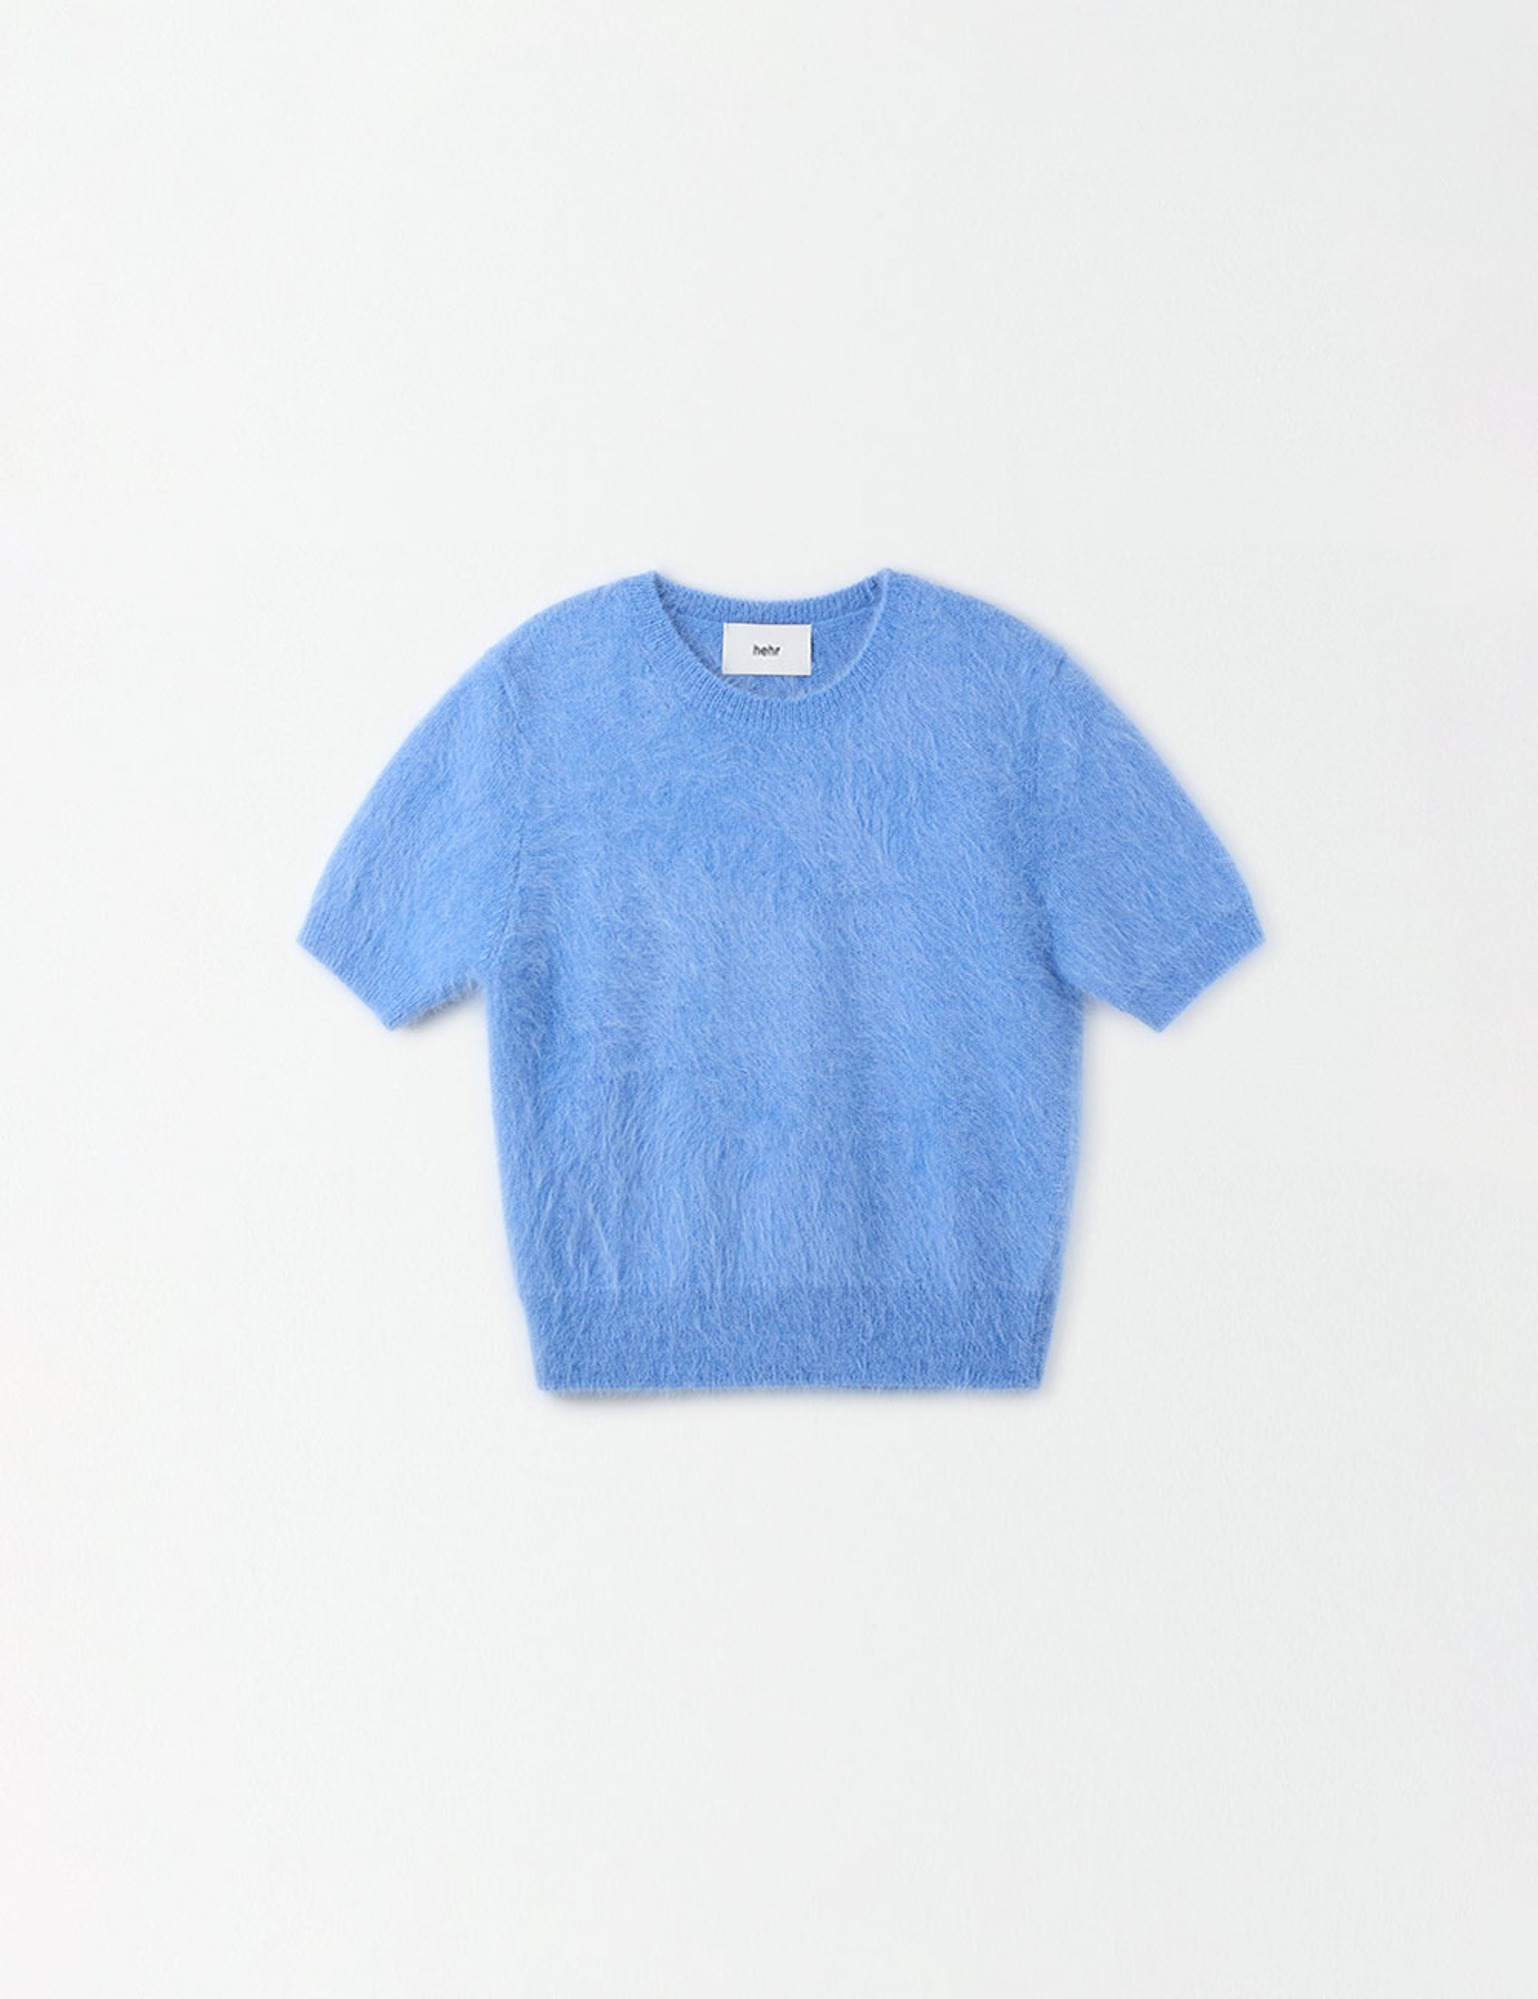 Aria knit (Blue)